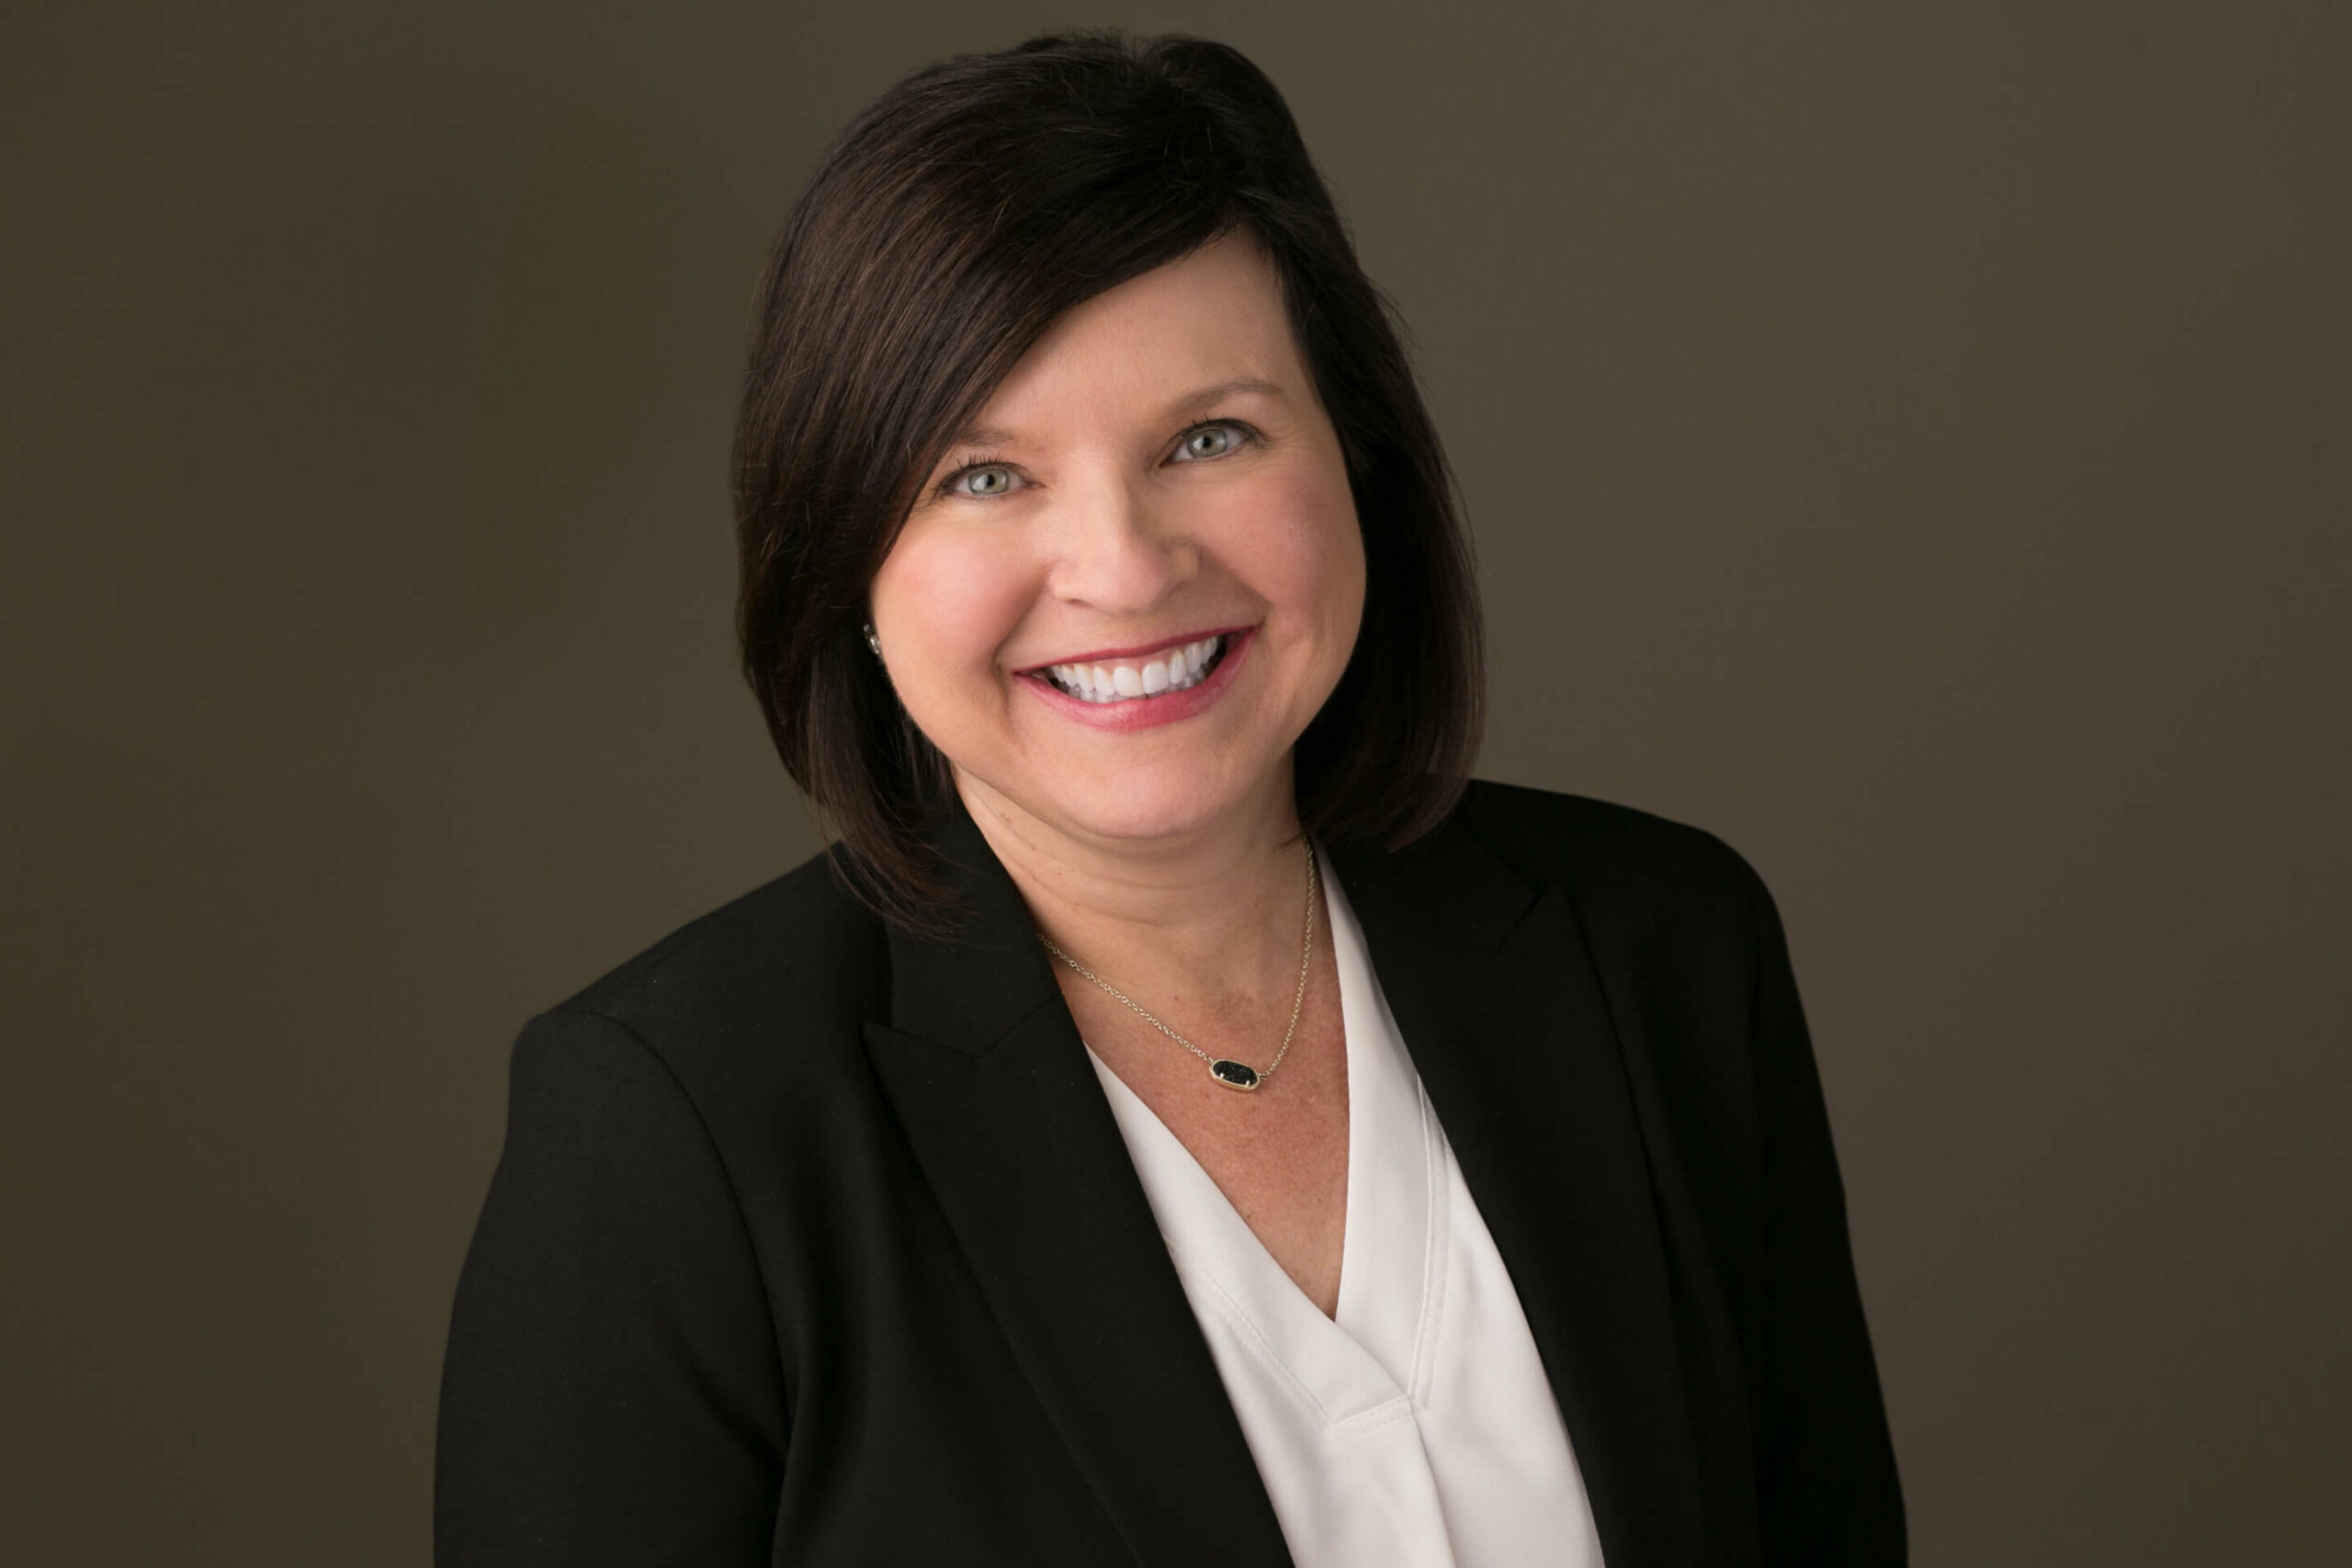 Christy RosadoPresident, Long-Term Care Pharmacy & Chief Marketing Officer